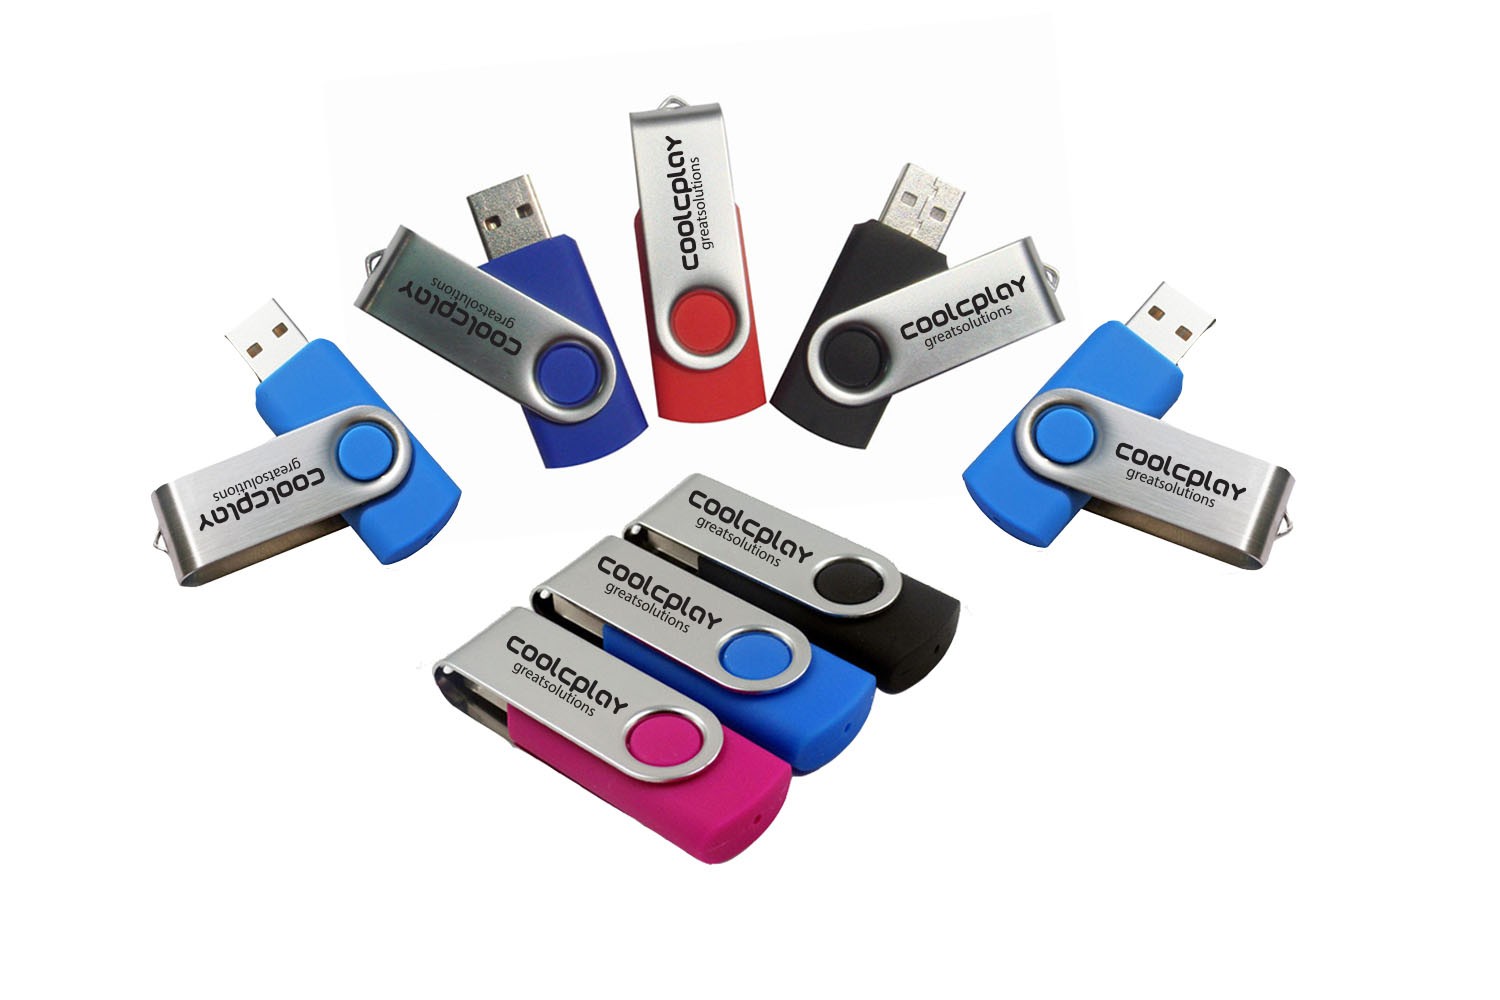 Colorful 256 MB USB Flashdrive With Swivel Cap